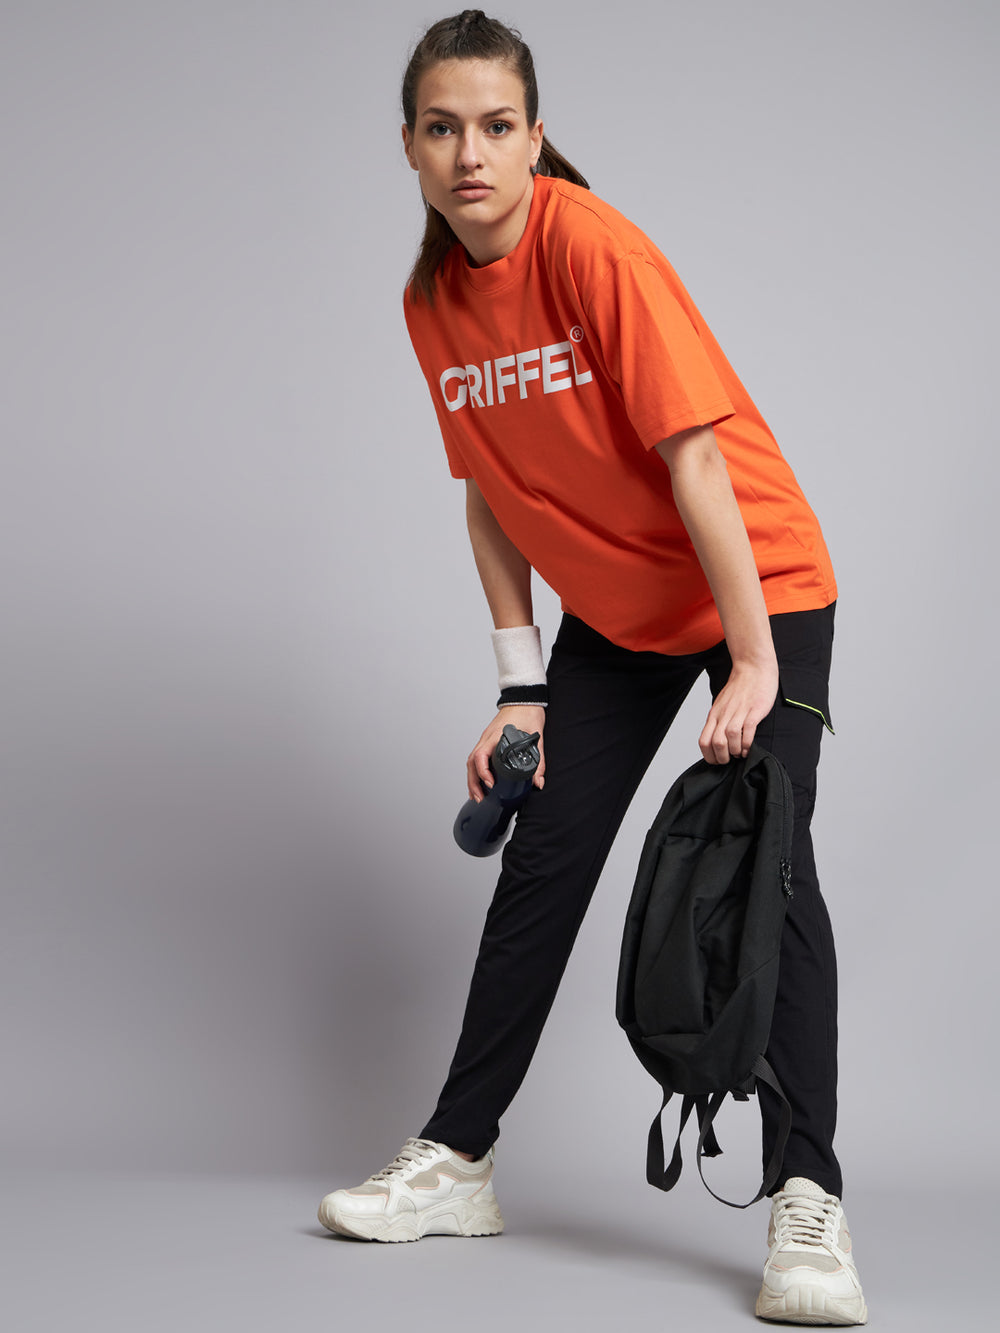 GRIFFEL Women SIGNATURE LOGO oversized Drop Shoulder Neon Orange T-shirt - griffel